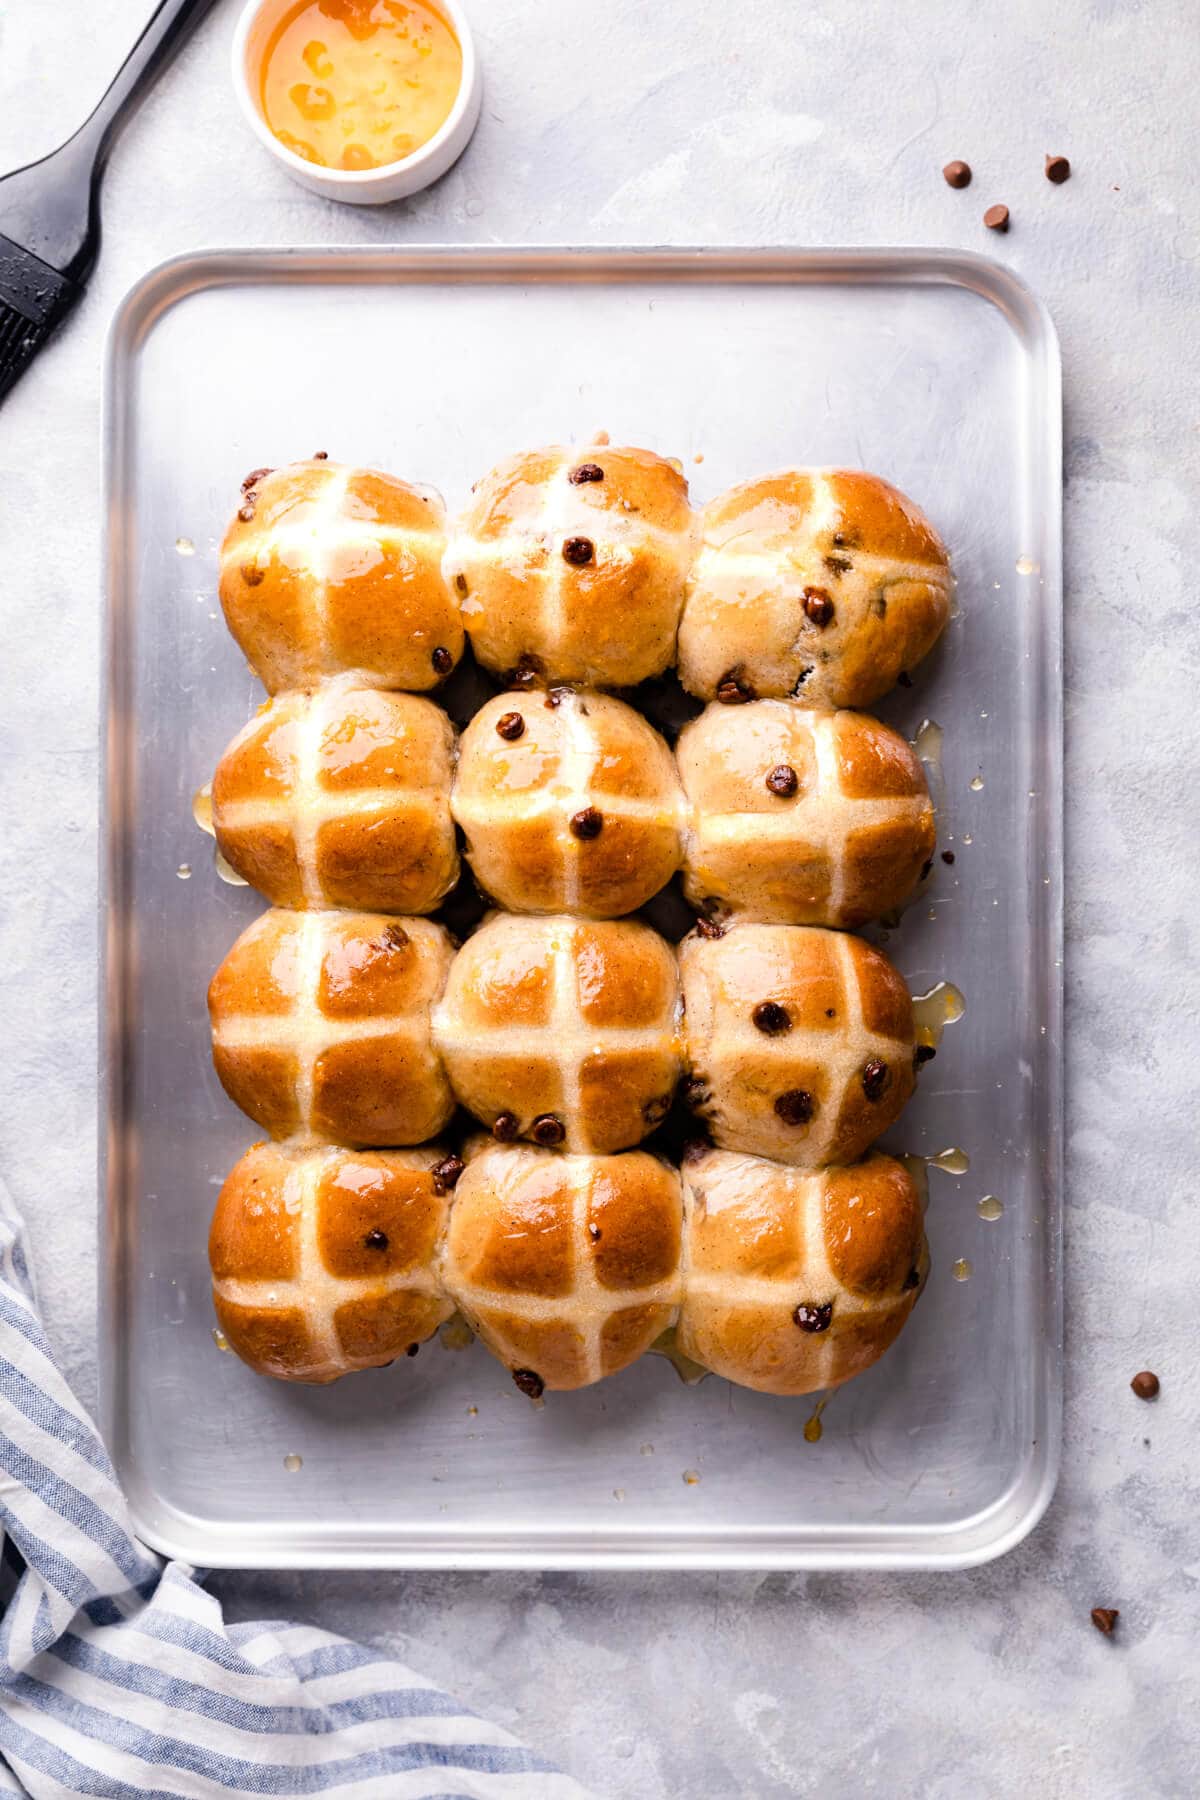 top view of baking sheet with hot cross buns